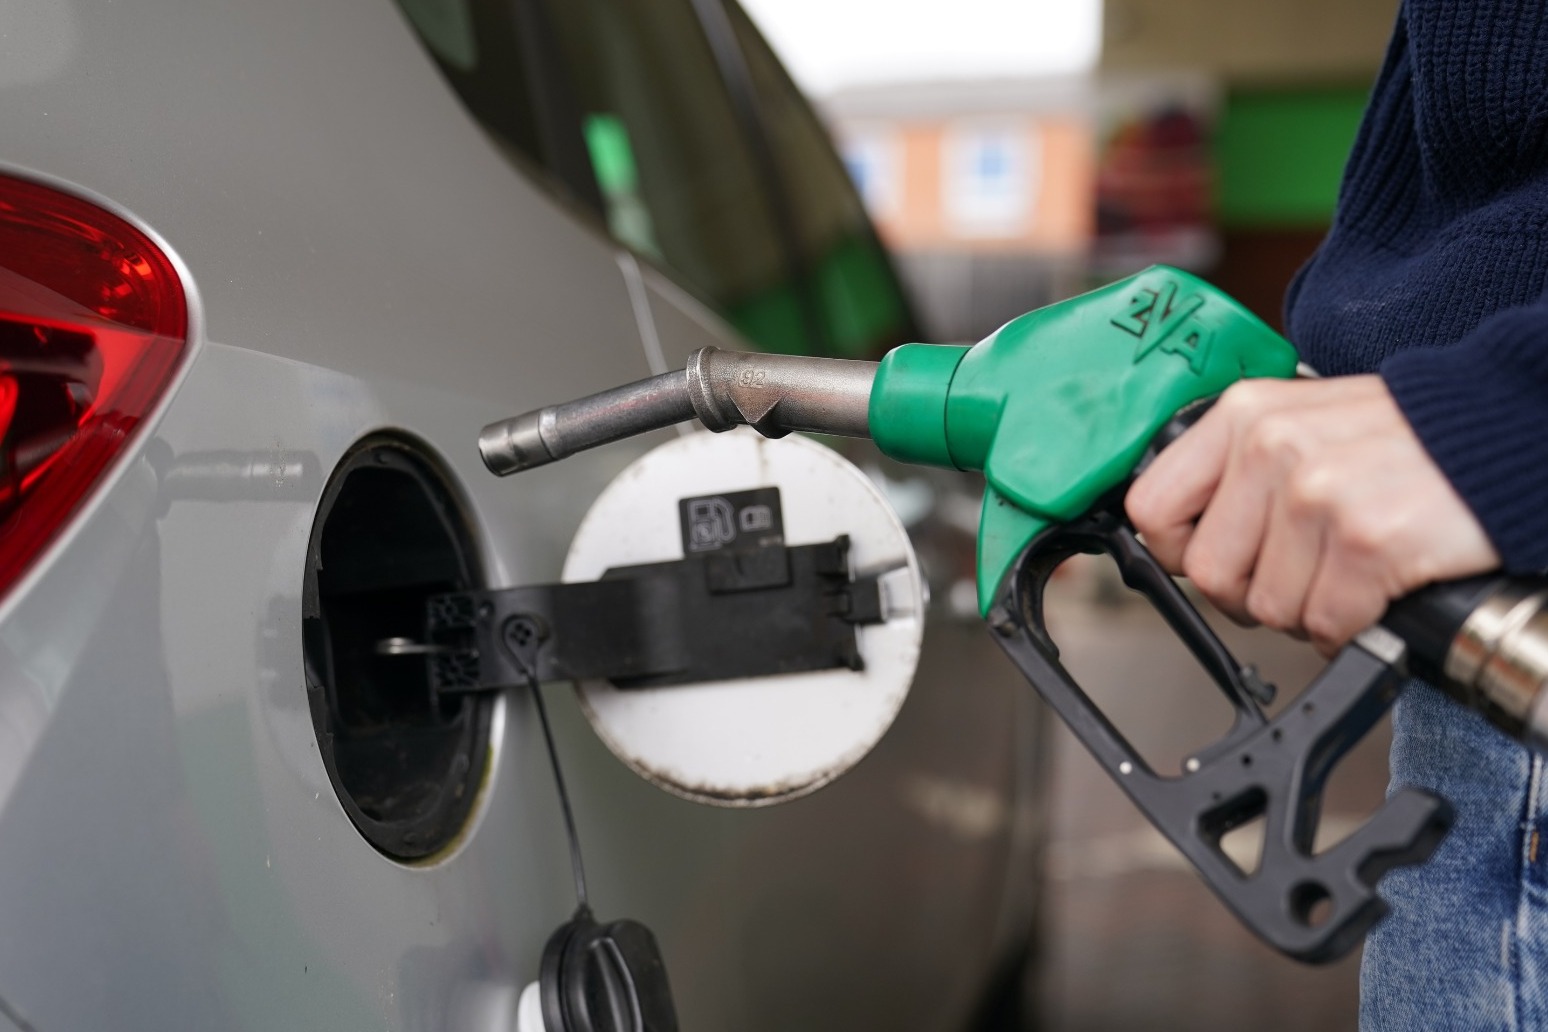 Diesel ‘perilously close’ to £2 per litre 